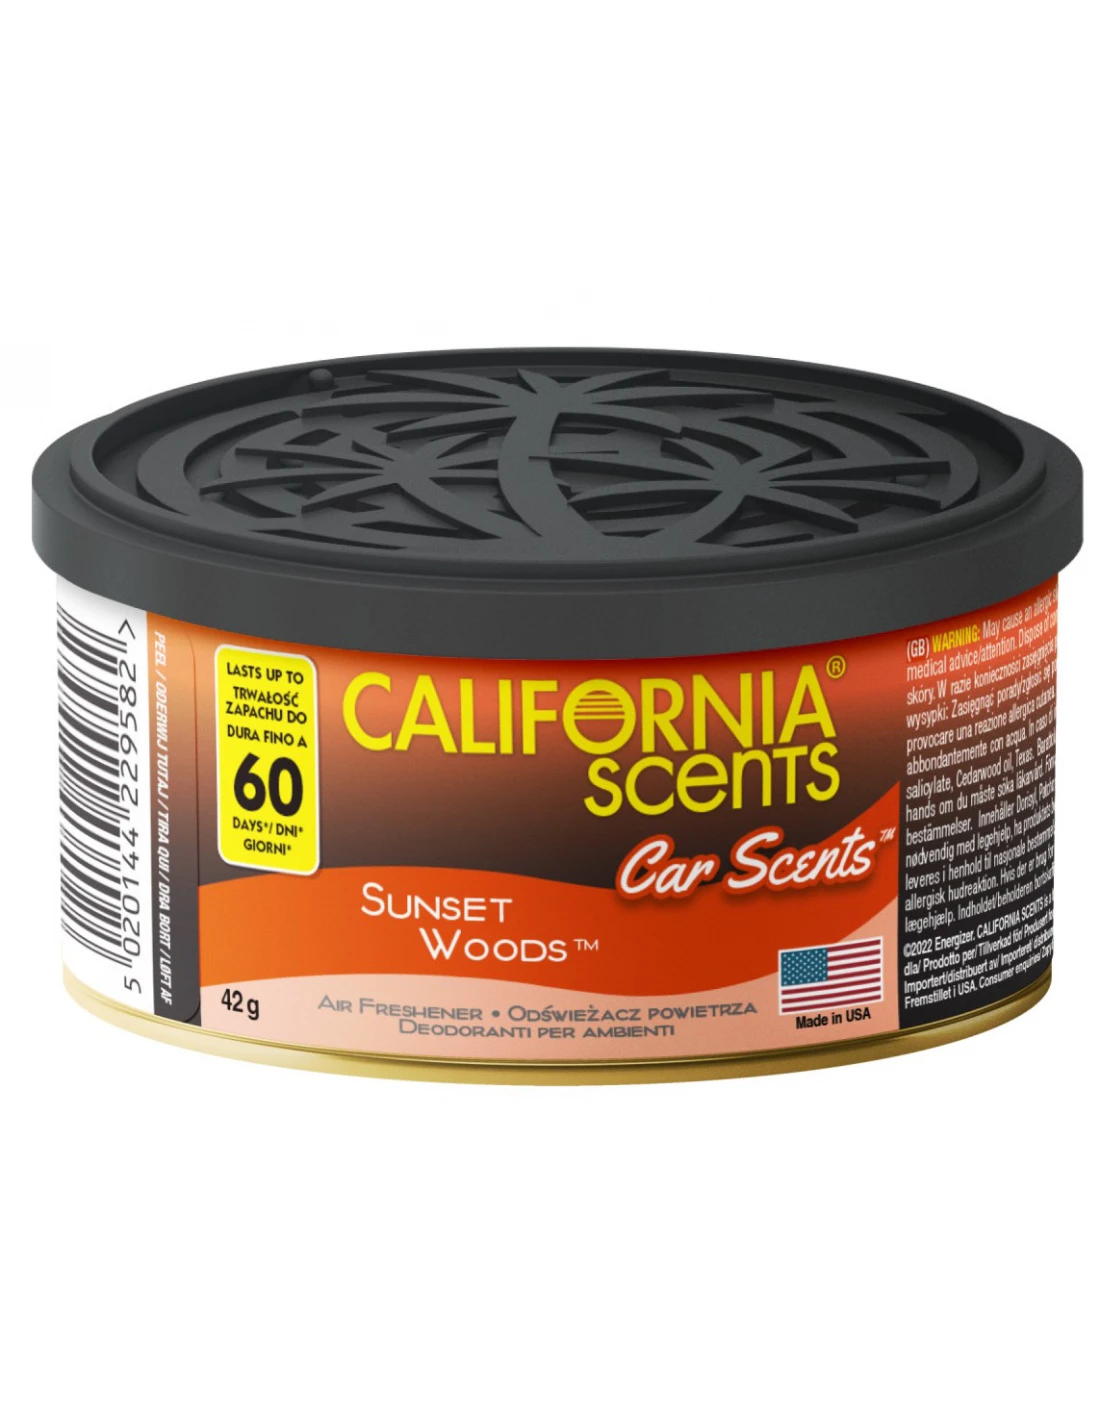 California Scents Car Scent Organic Golden State